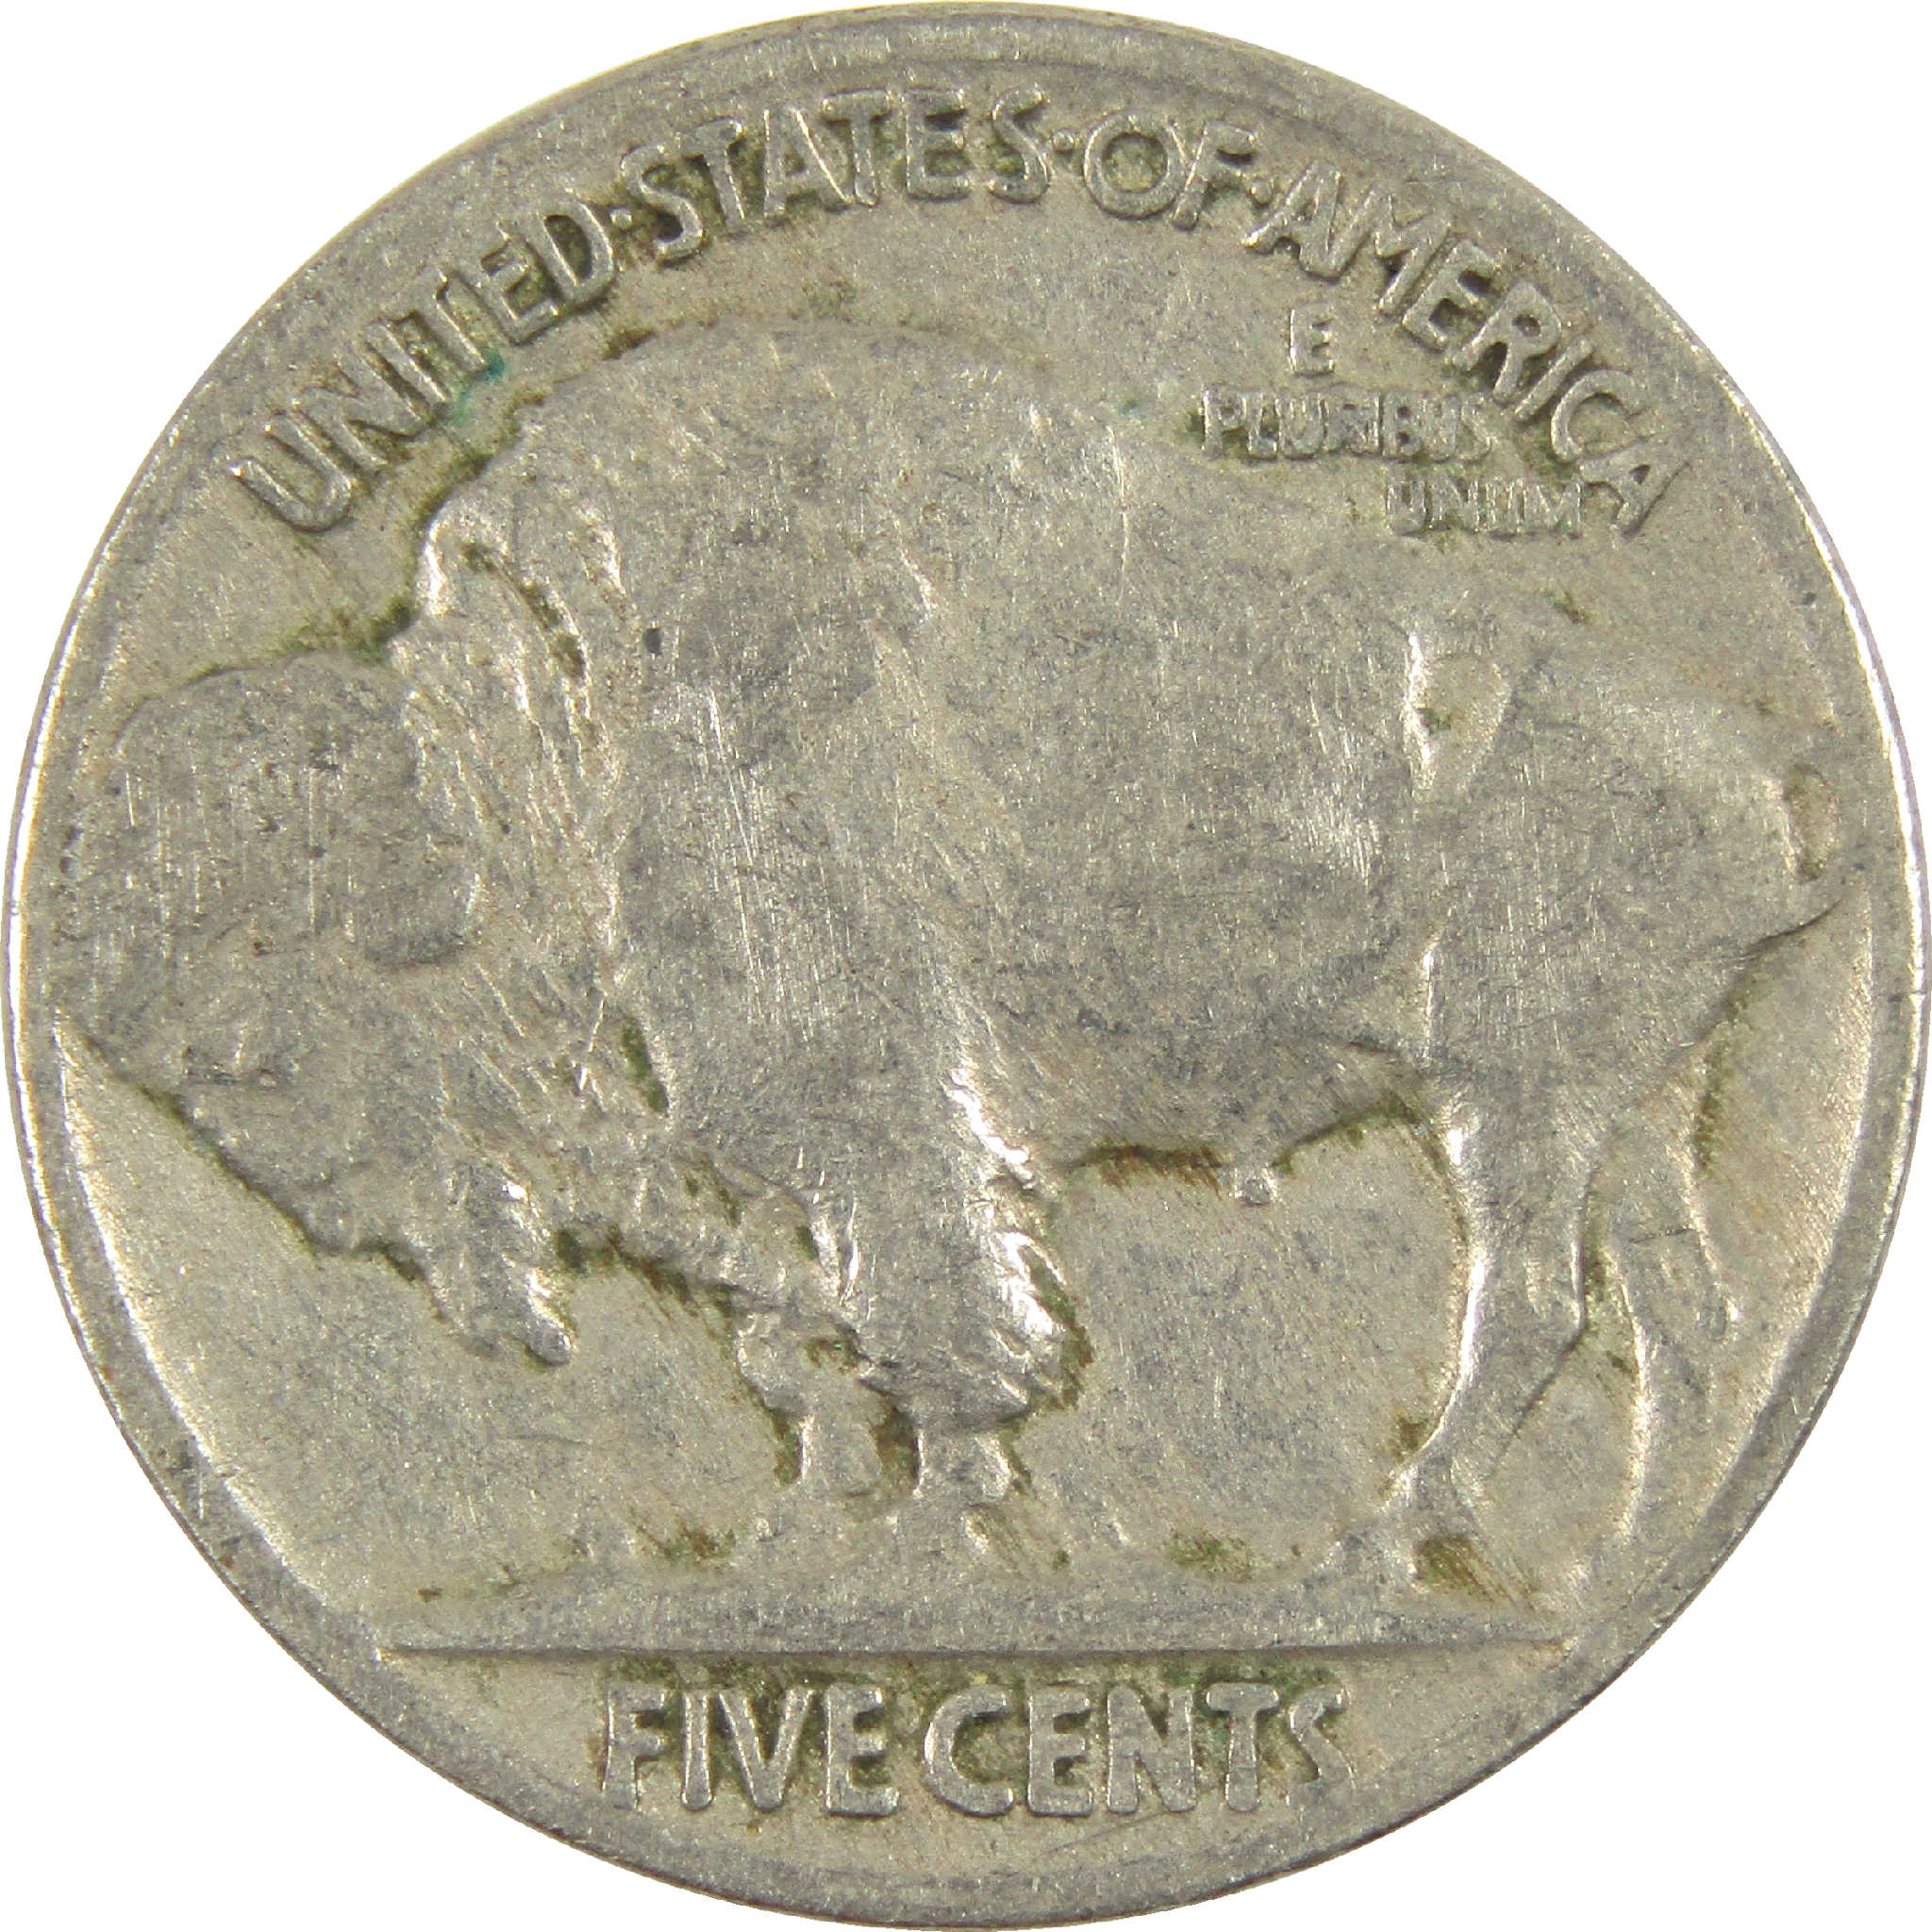 1930 Indian Head Buffalo Nickel VG Very Good 5c Coin